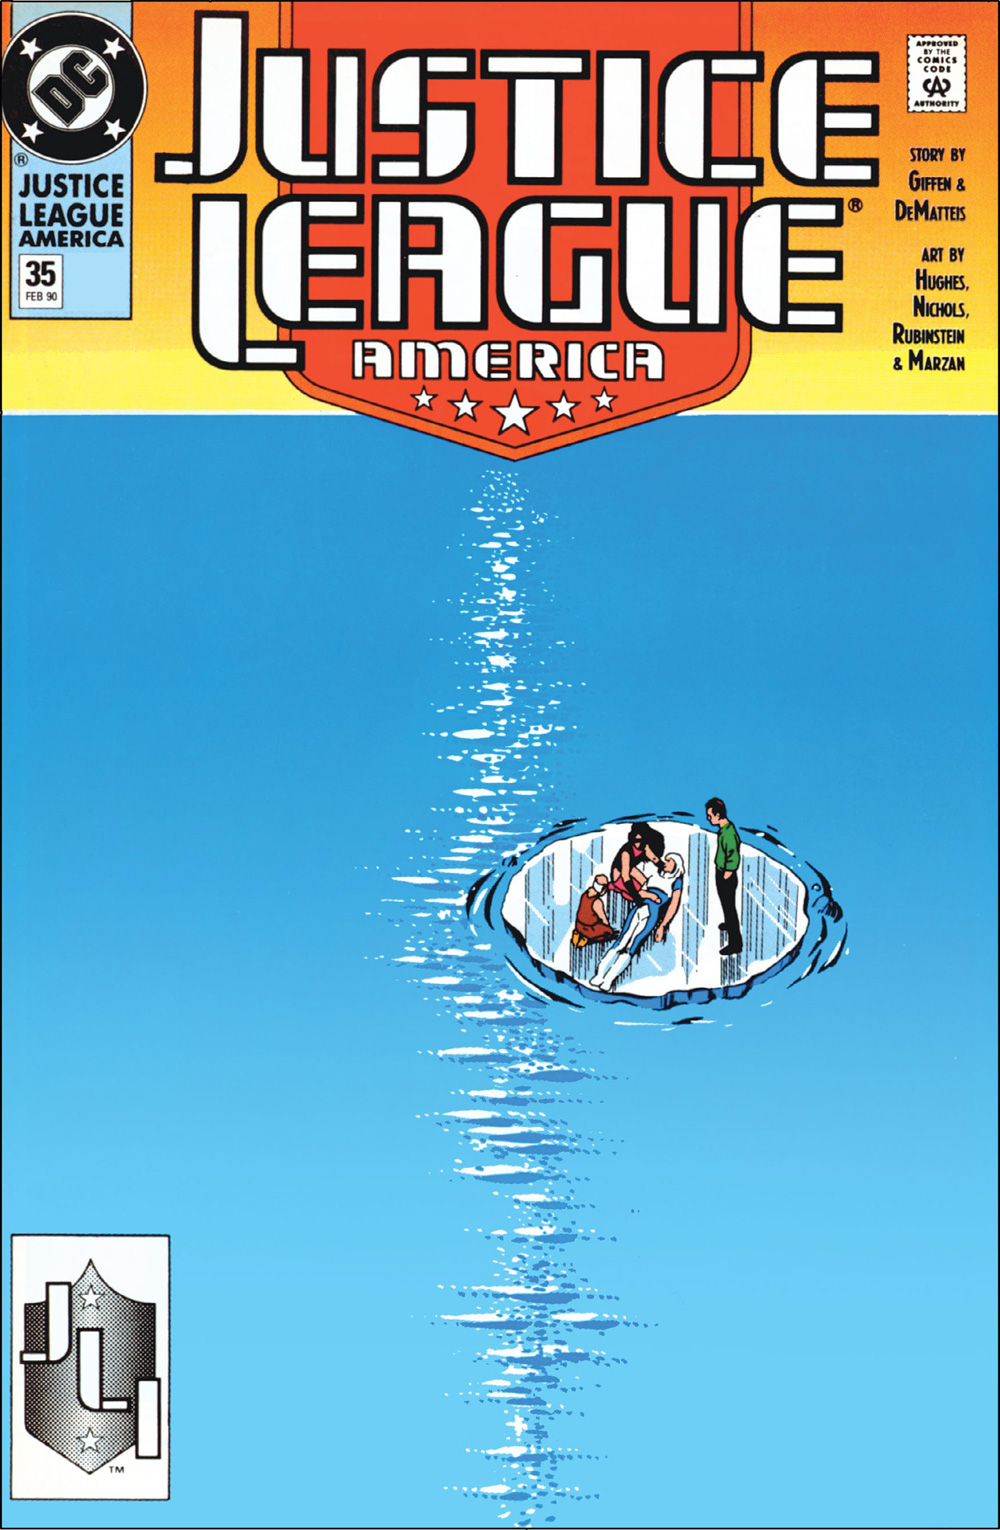 Justice League America #35 cover by Adam Hughes